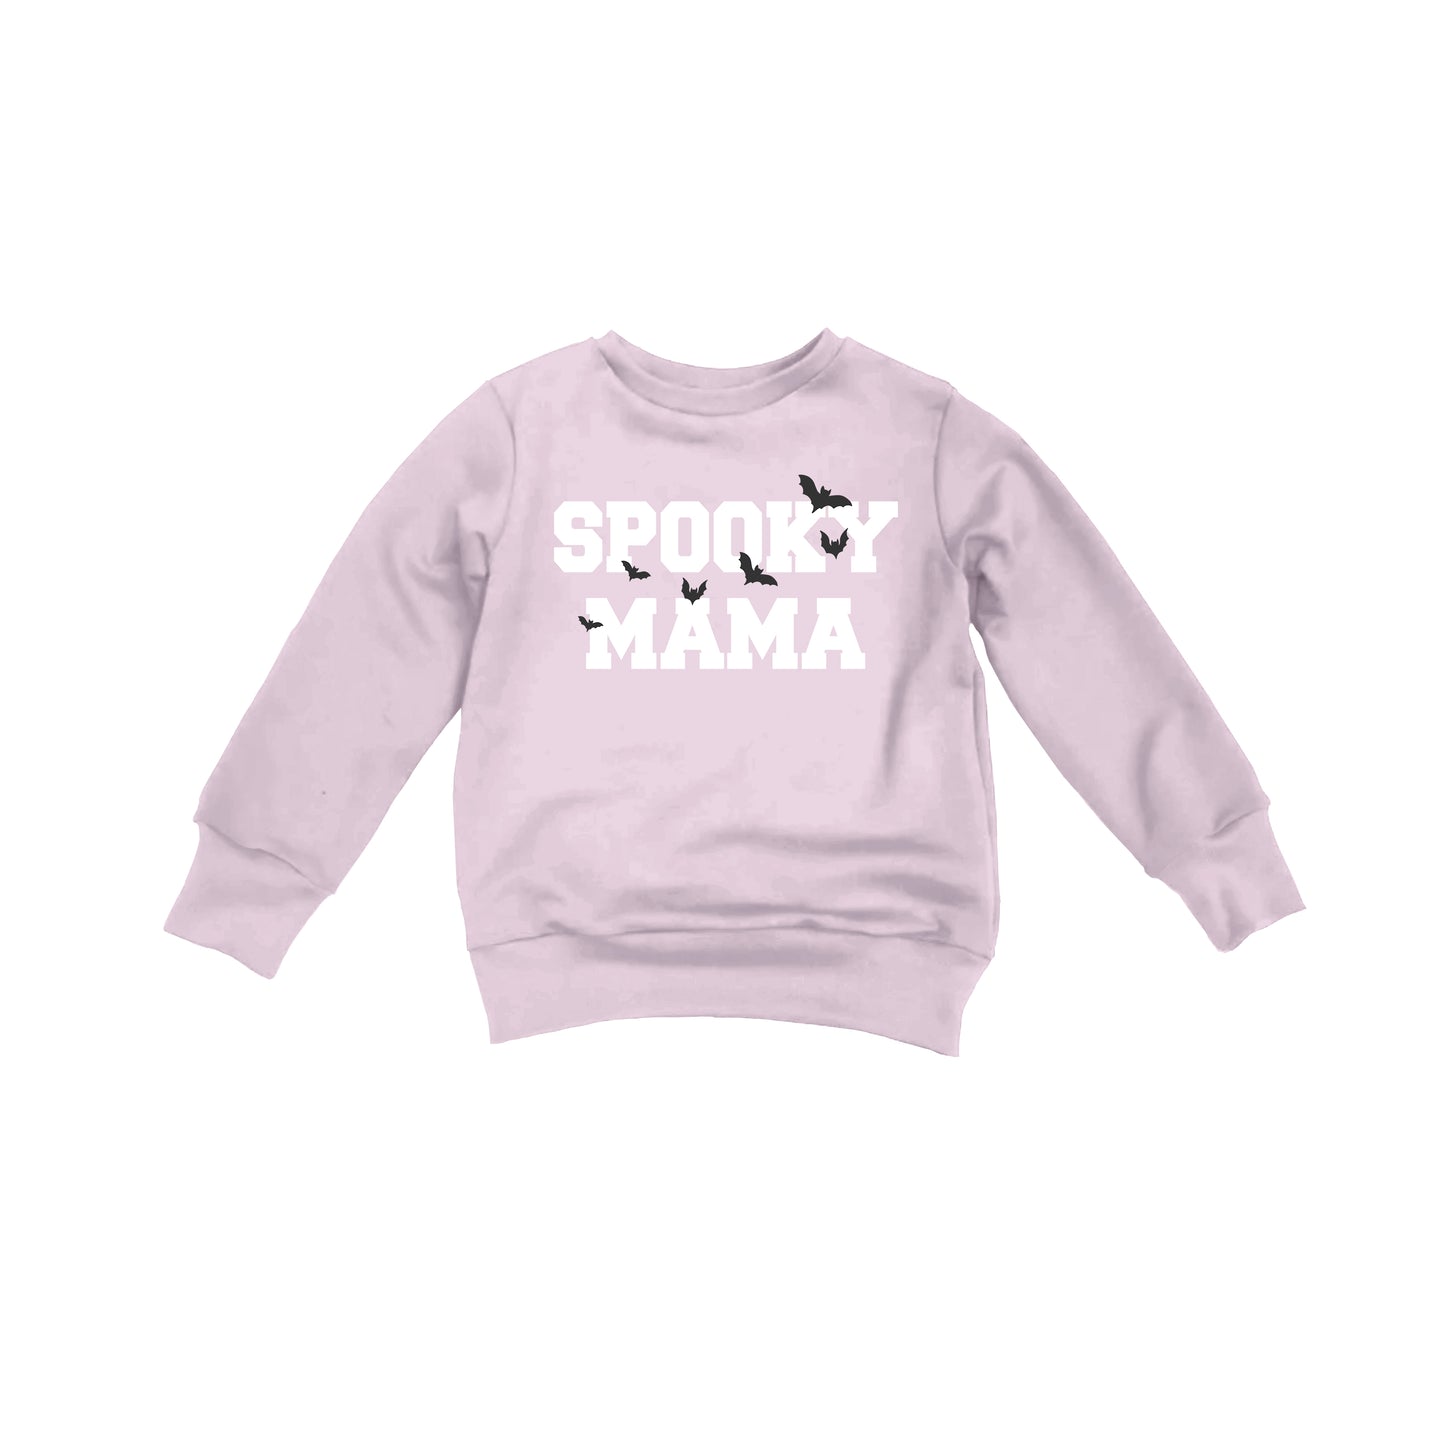 Spooky MAMA Sweatshirt - Lilac